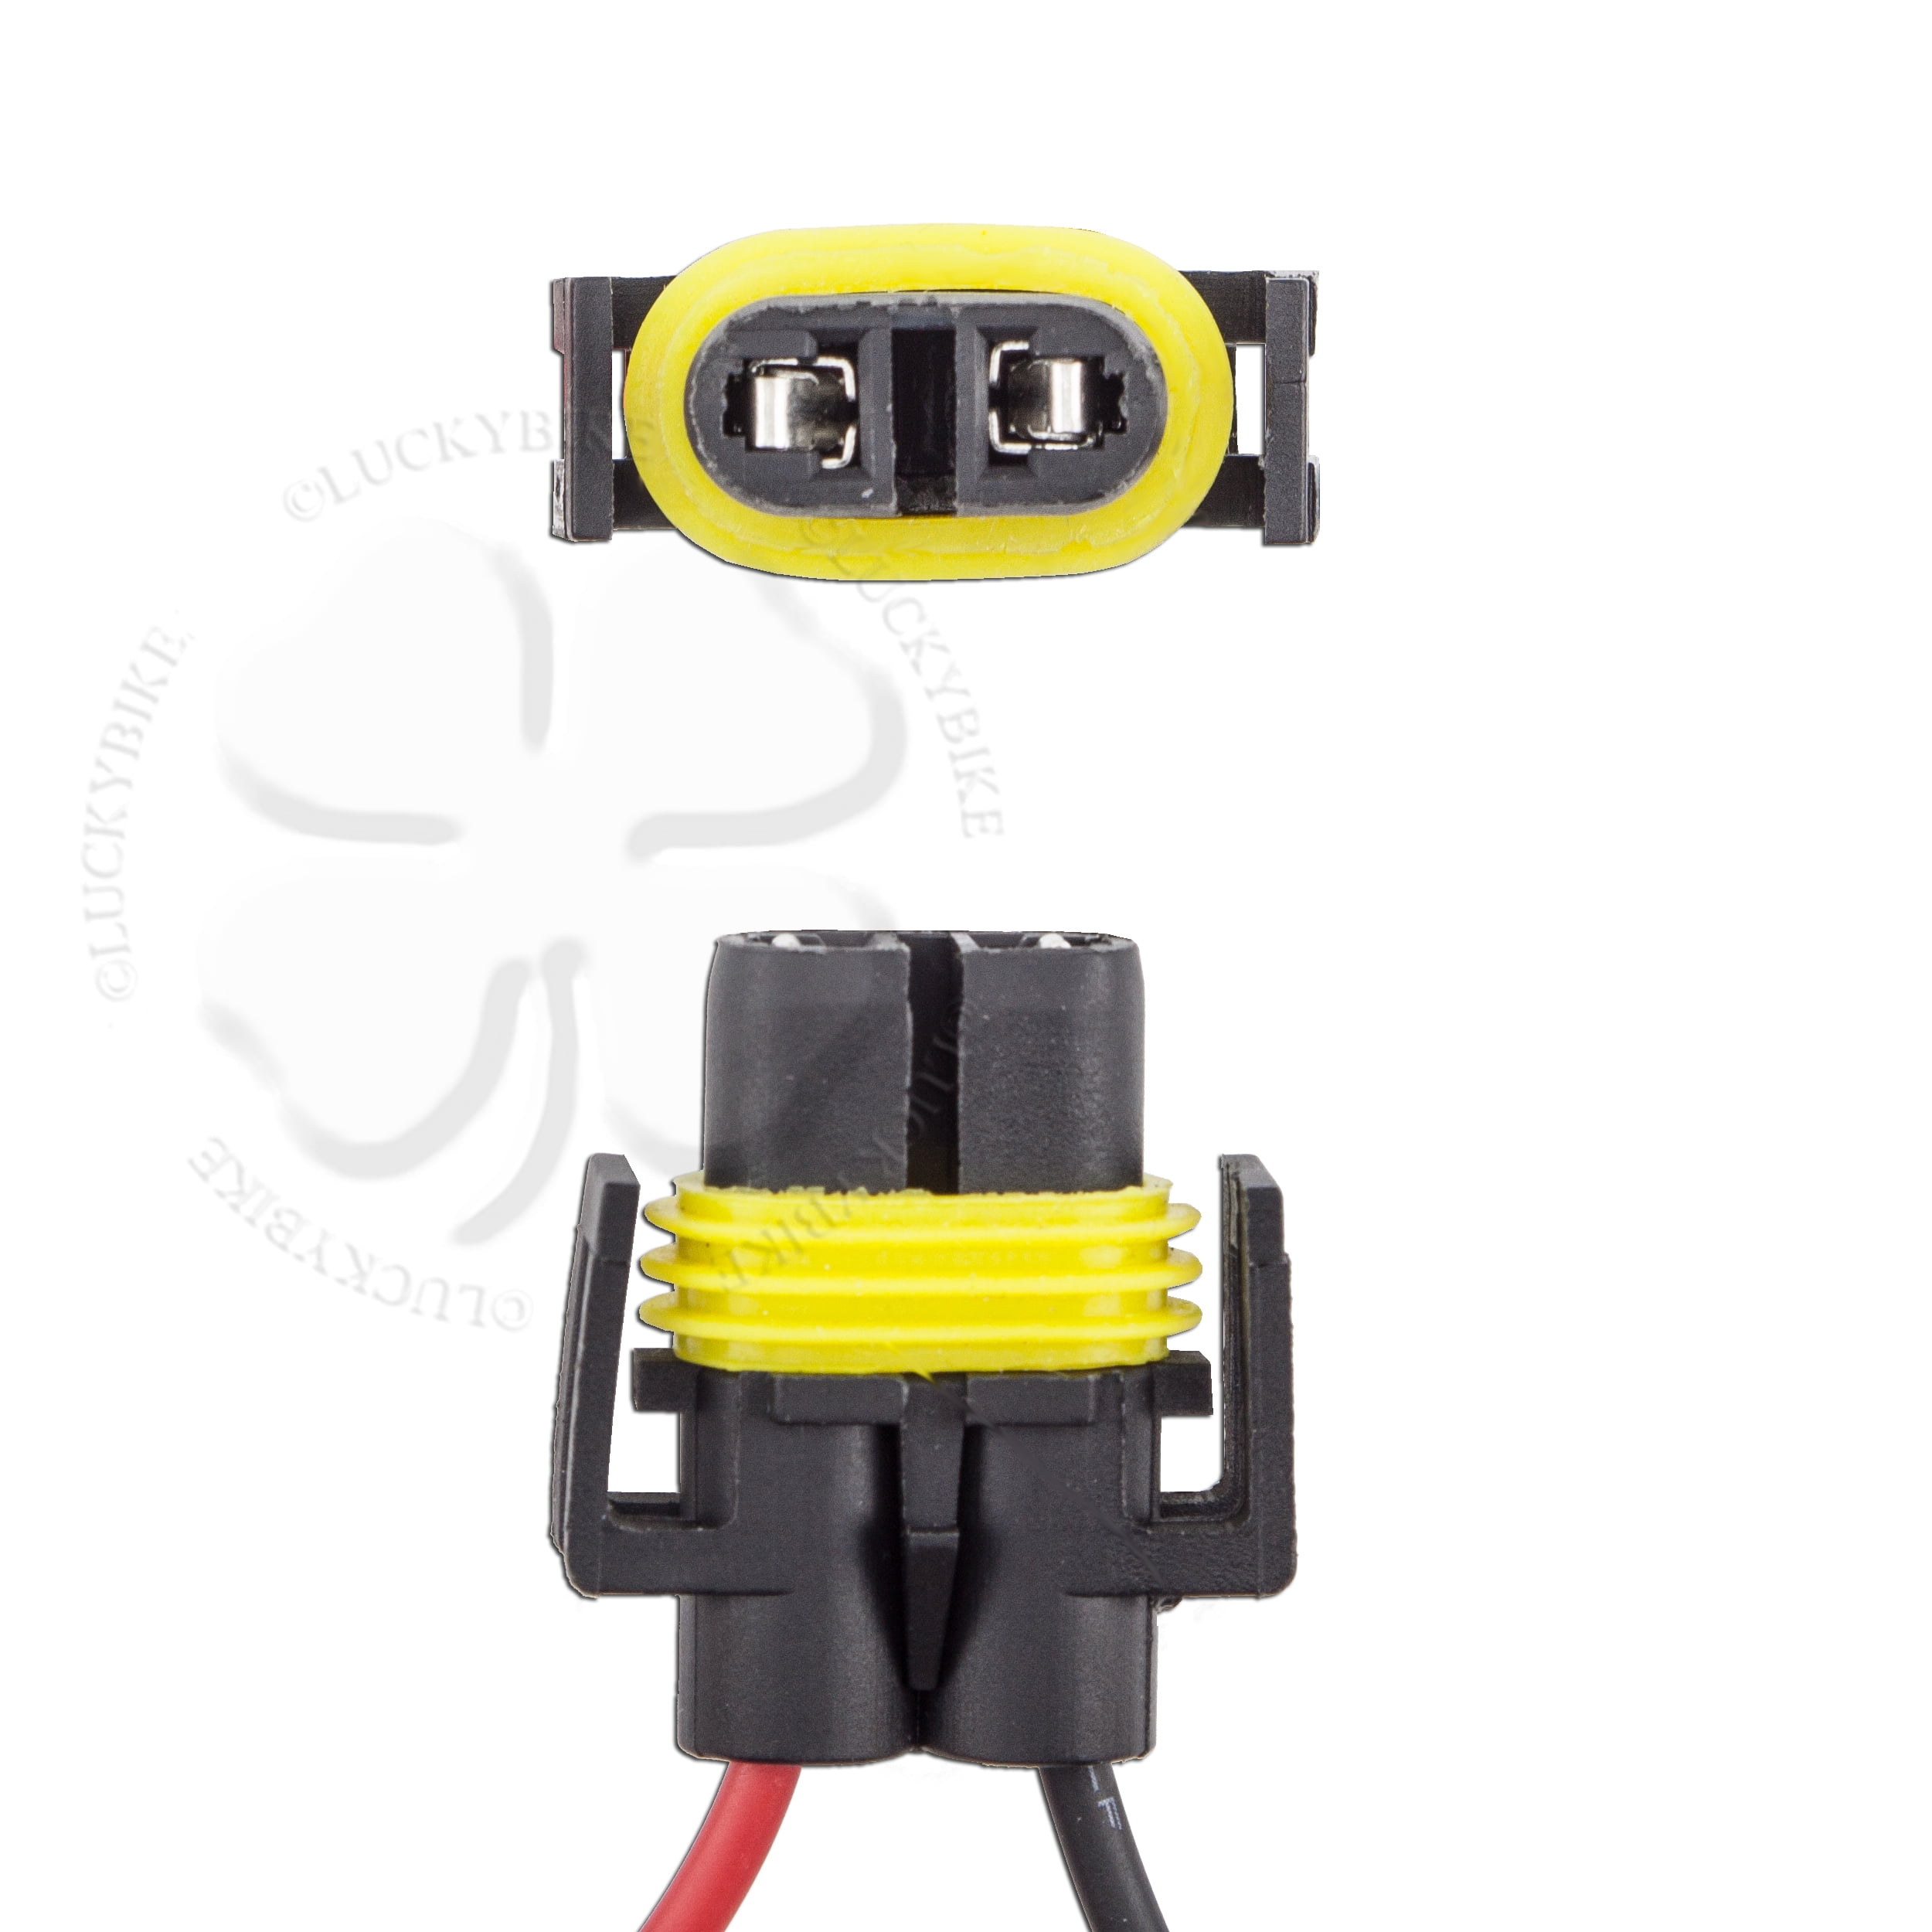 1x Female Headlight Adapter Plug H11 H8 H9 880 Light Connector Harness Socket